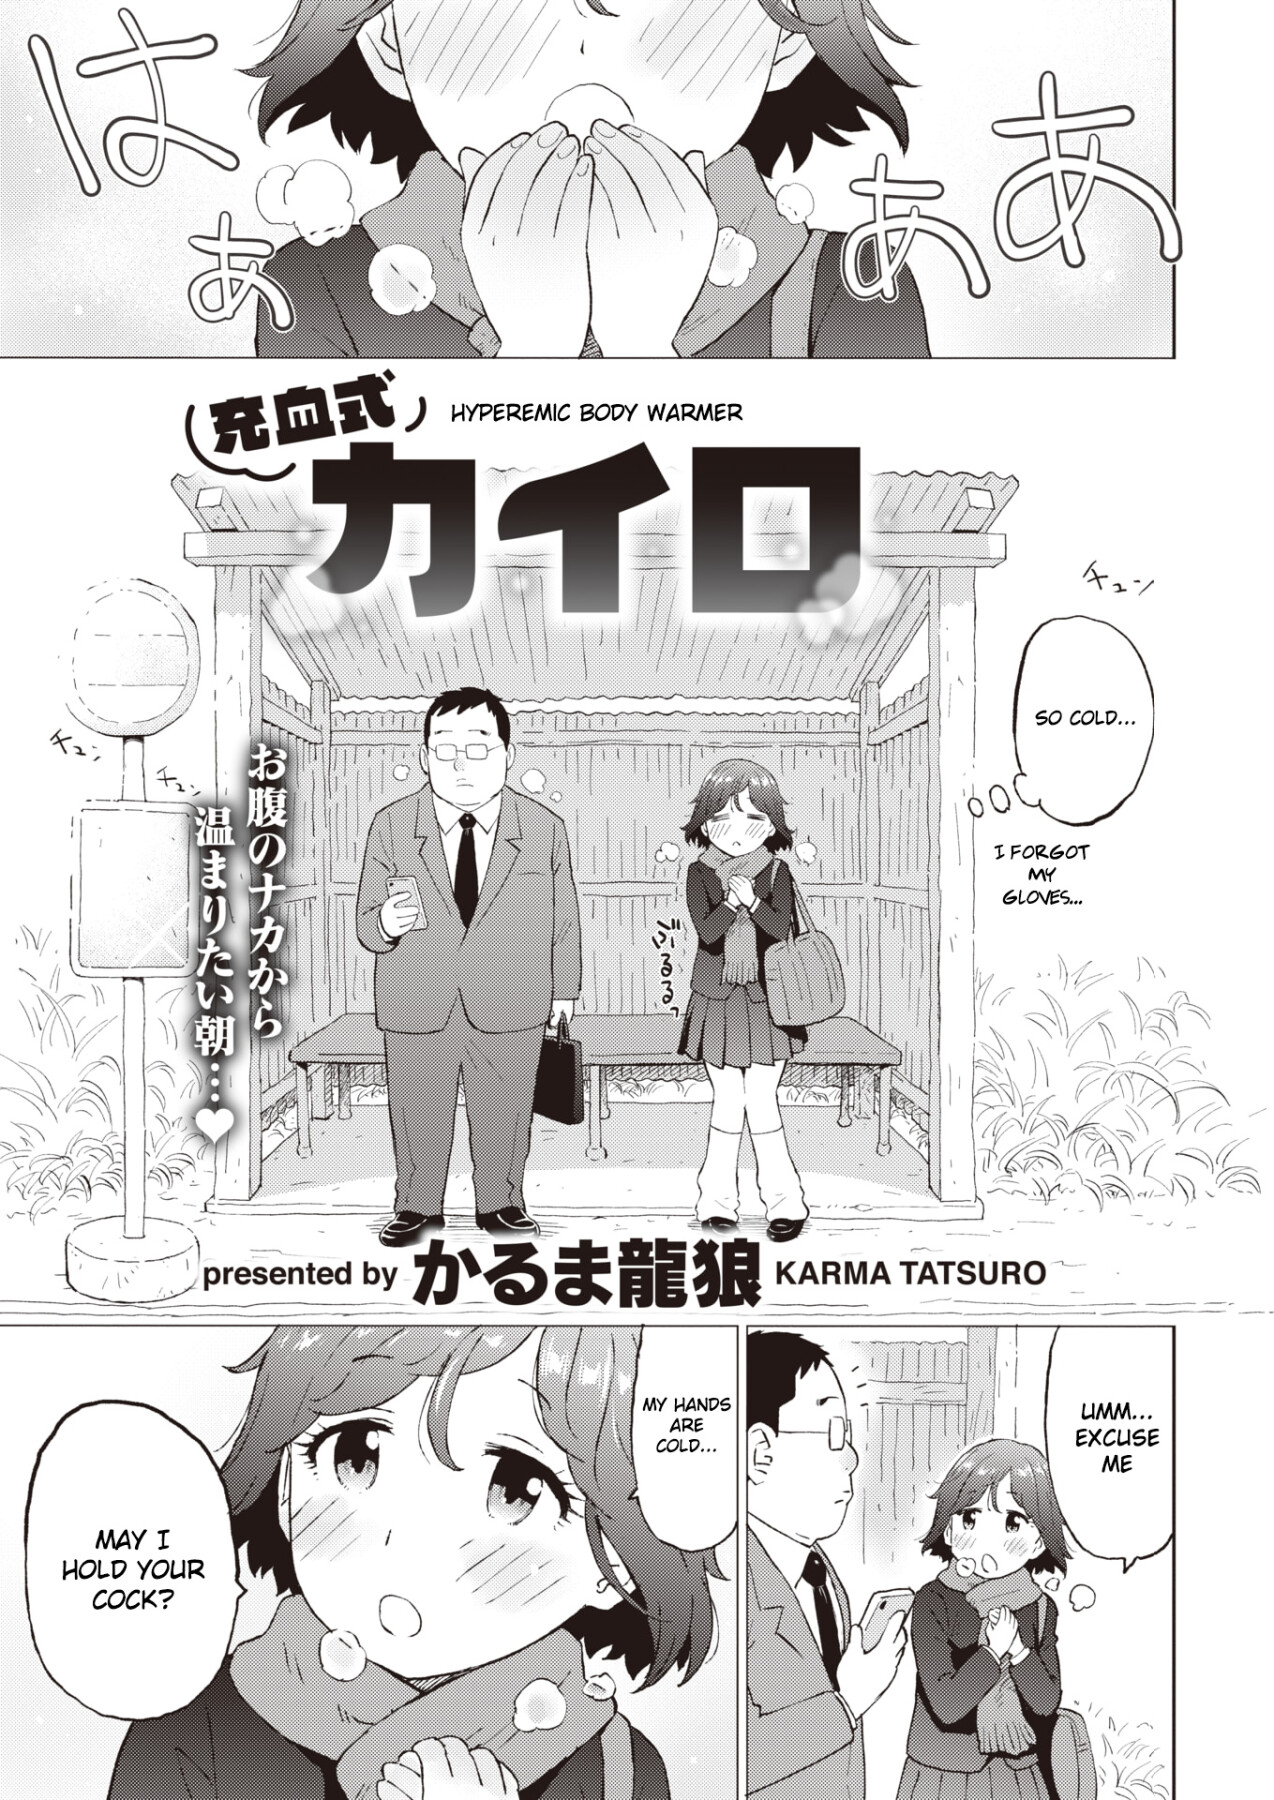 Hentai Manga Comic-Hyperemic Body Warmer-Read-1